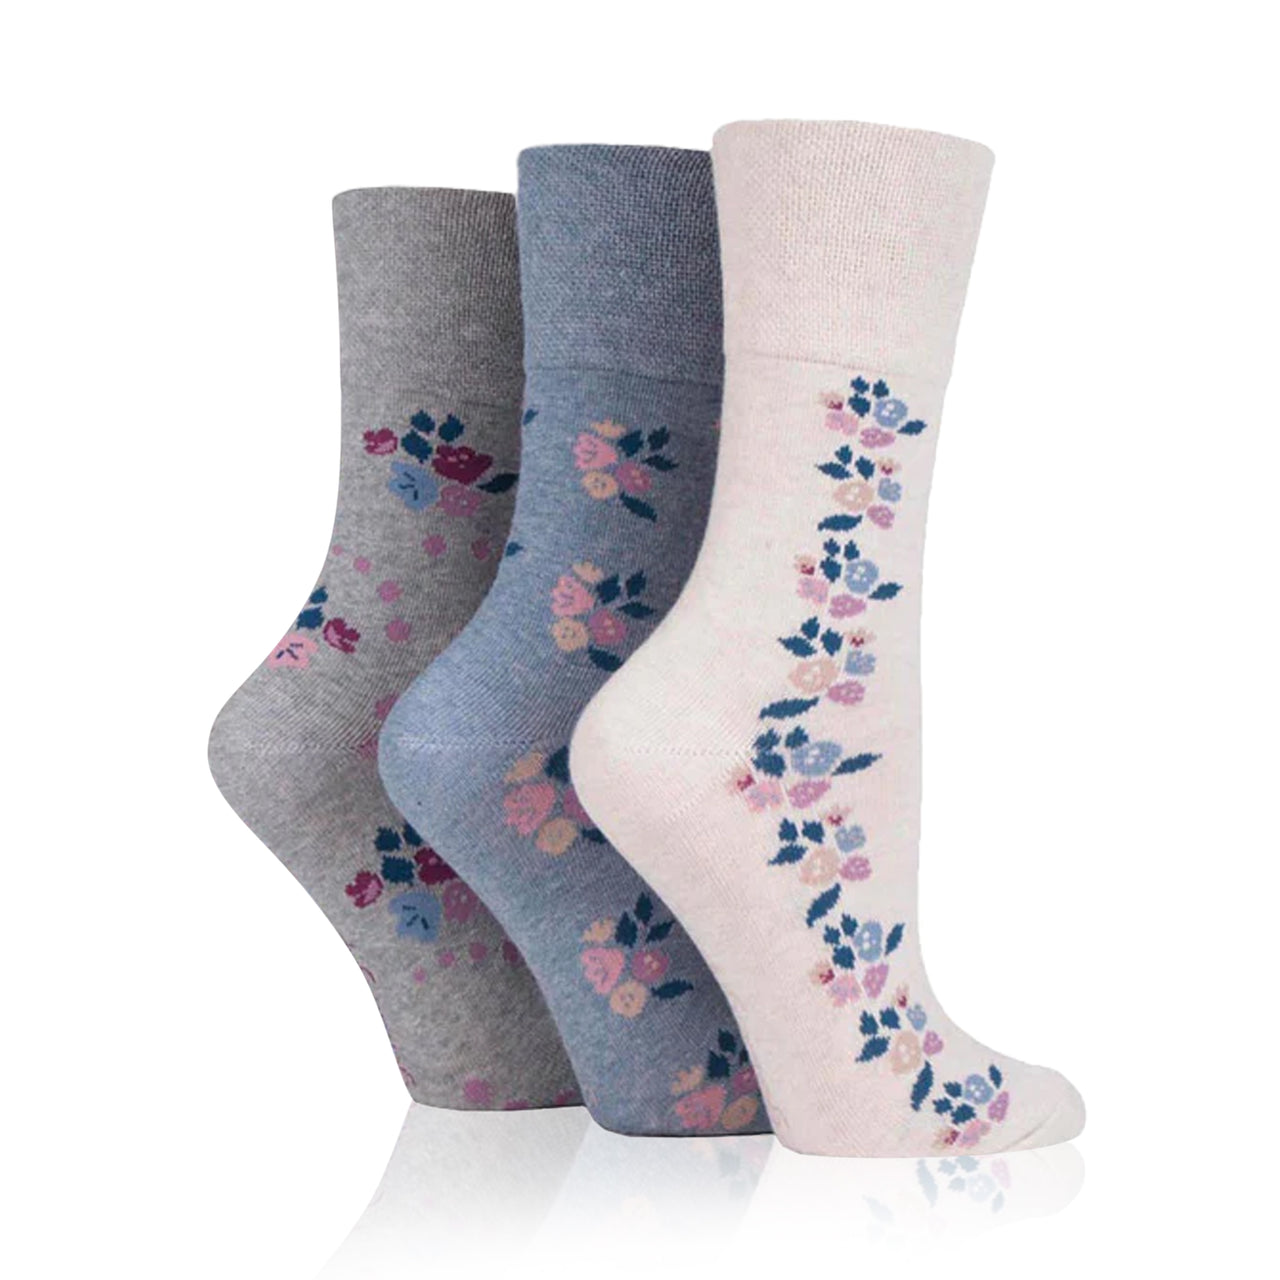 diabetic non binding socks in neutral floral